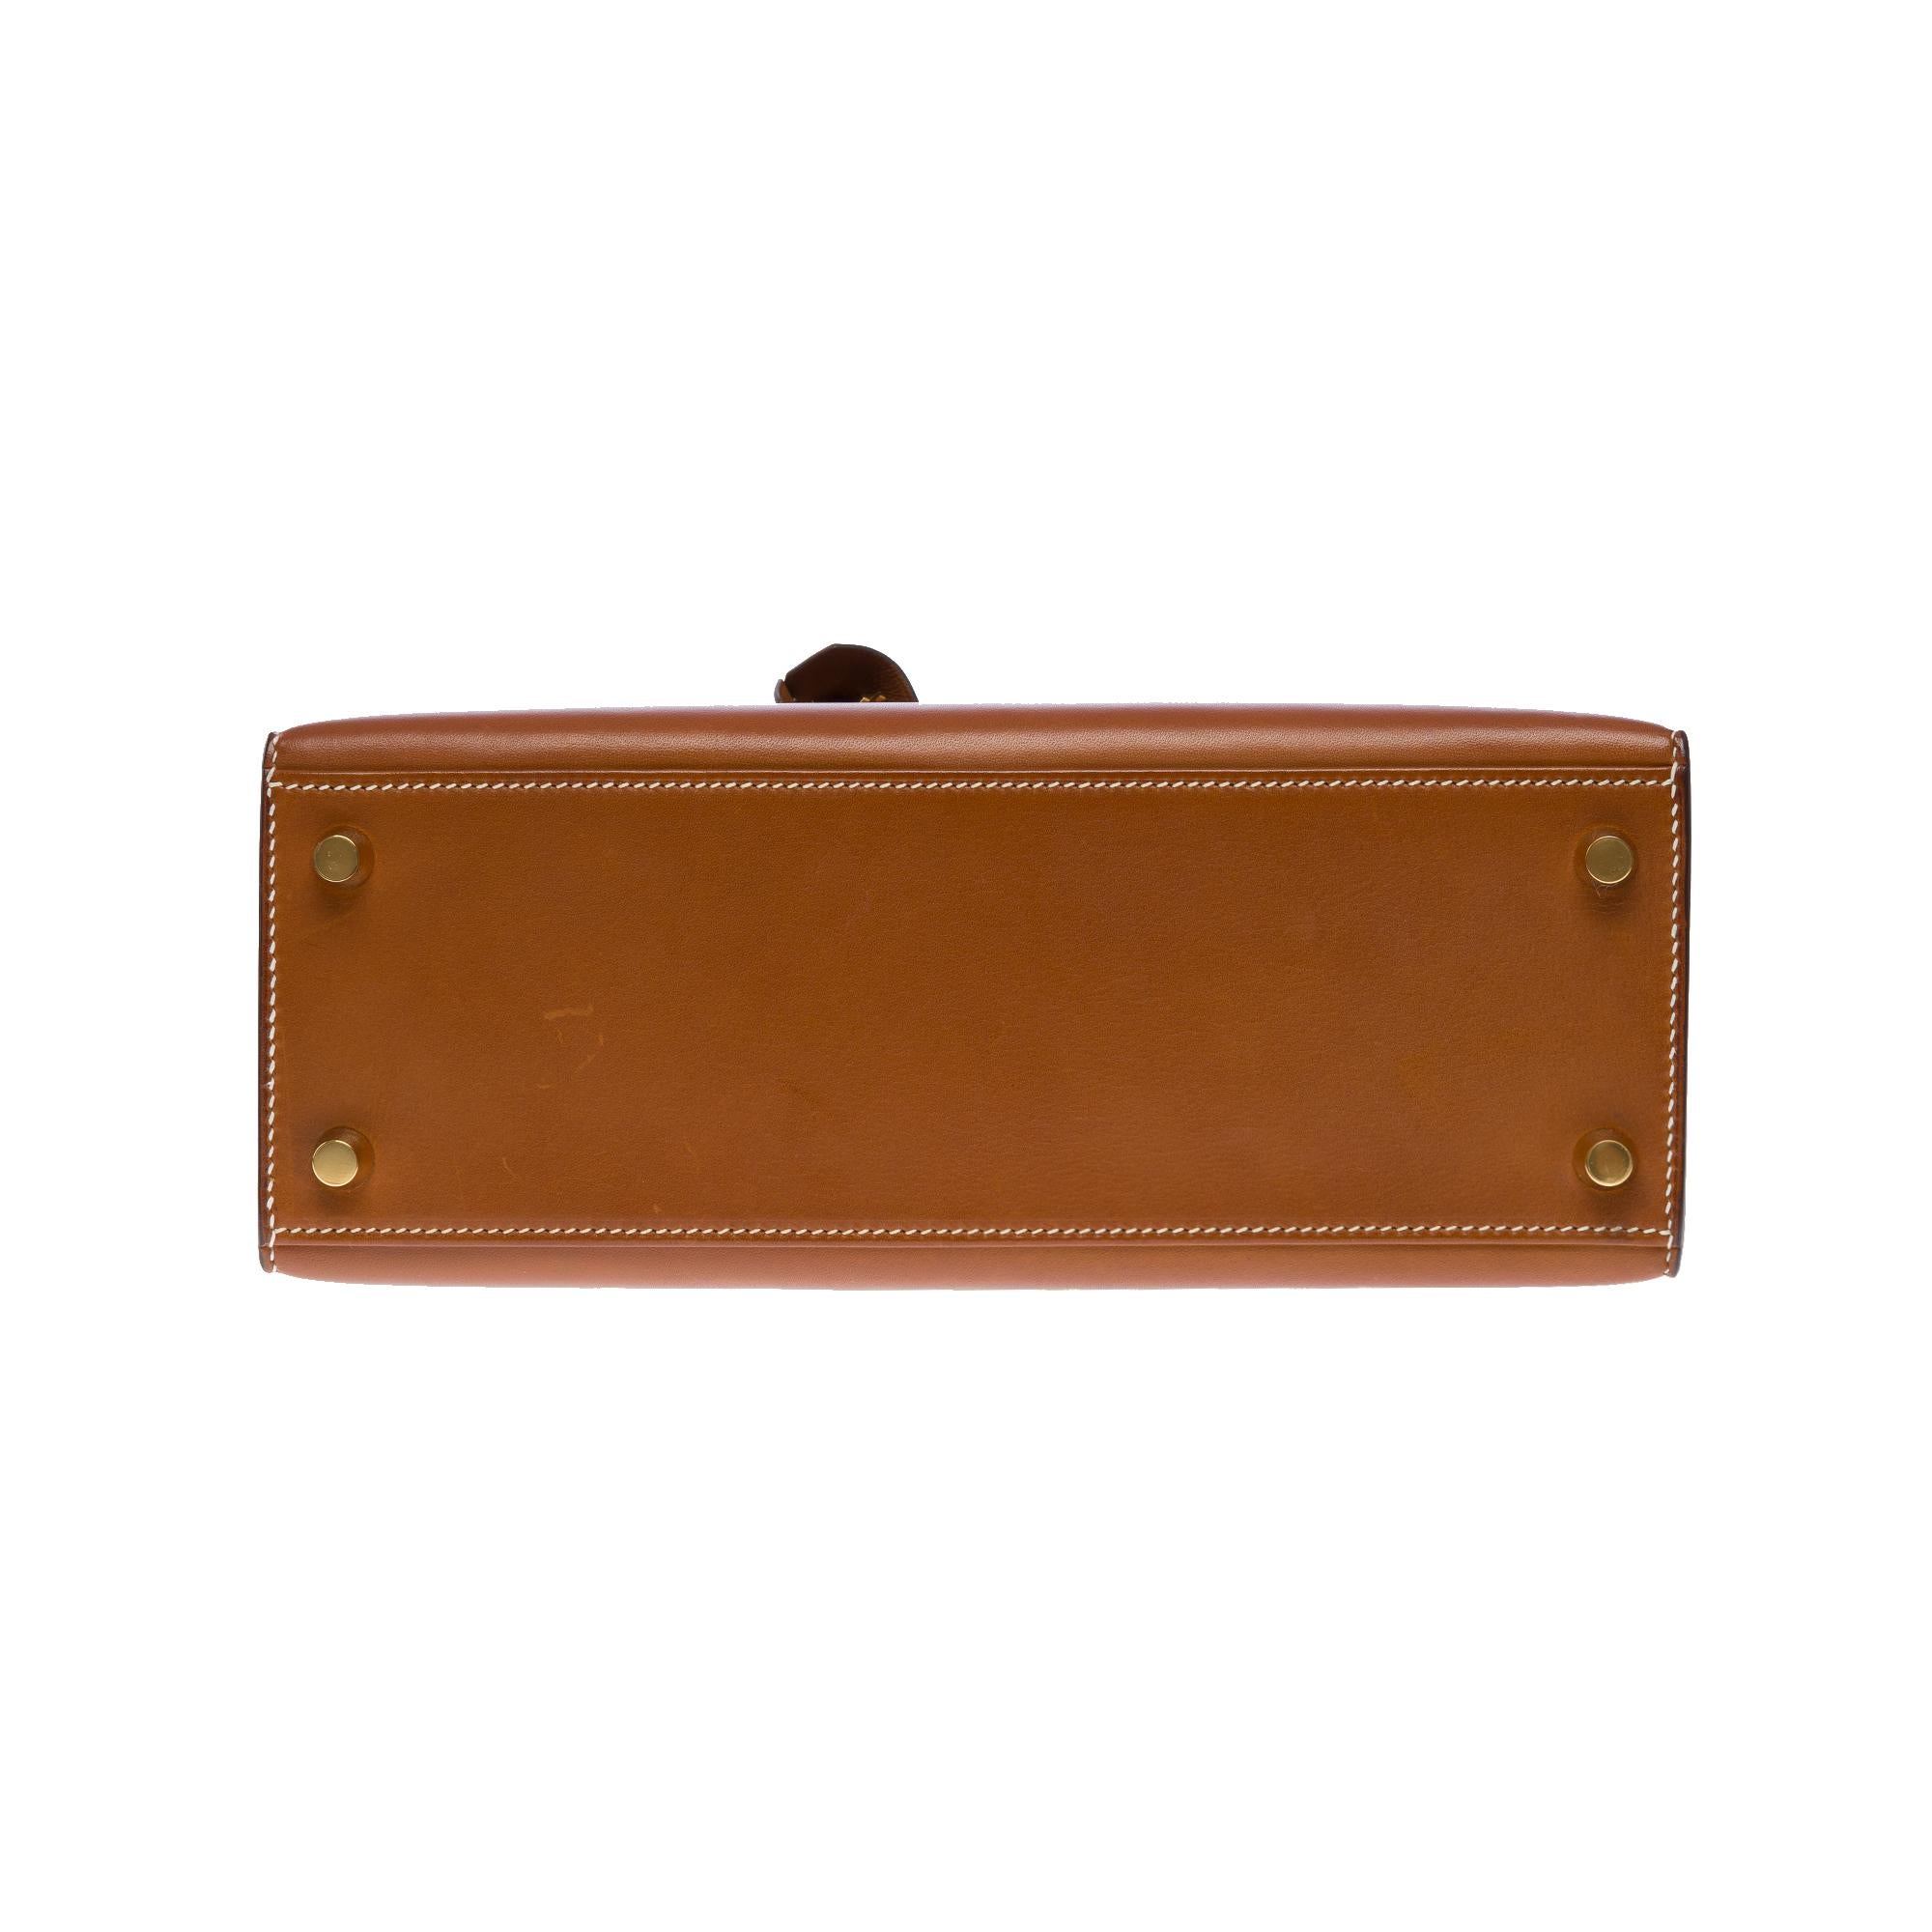 Very Rare Hermès Kelly 25 sellier handbag strap in Gold Barenia leather, GHW 7